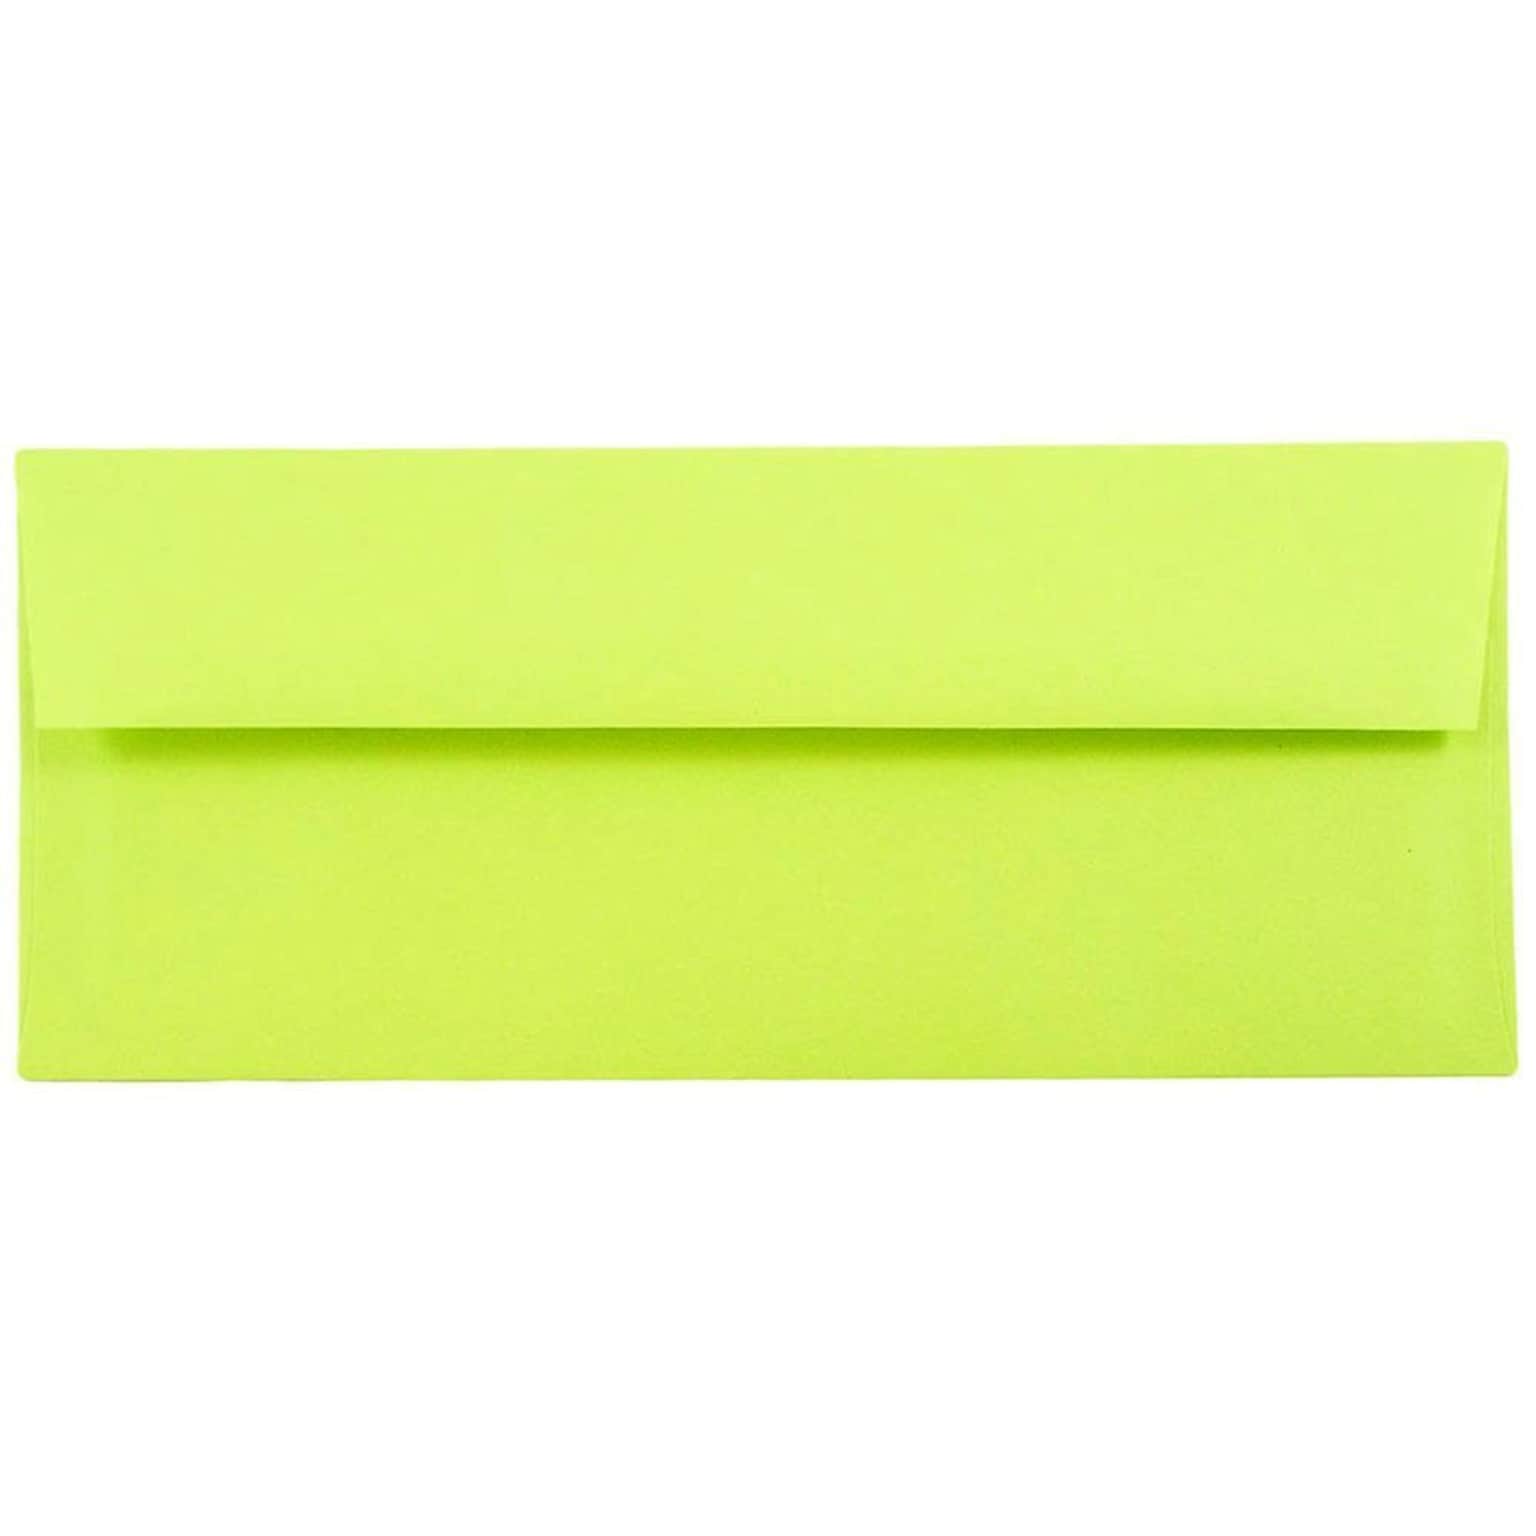 JAM Paper #10 Business Envelope, 4 1/8 x 9 1/2, Lime Green, 50/Pack (71091I)